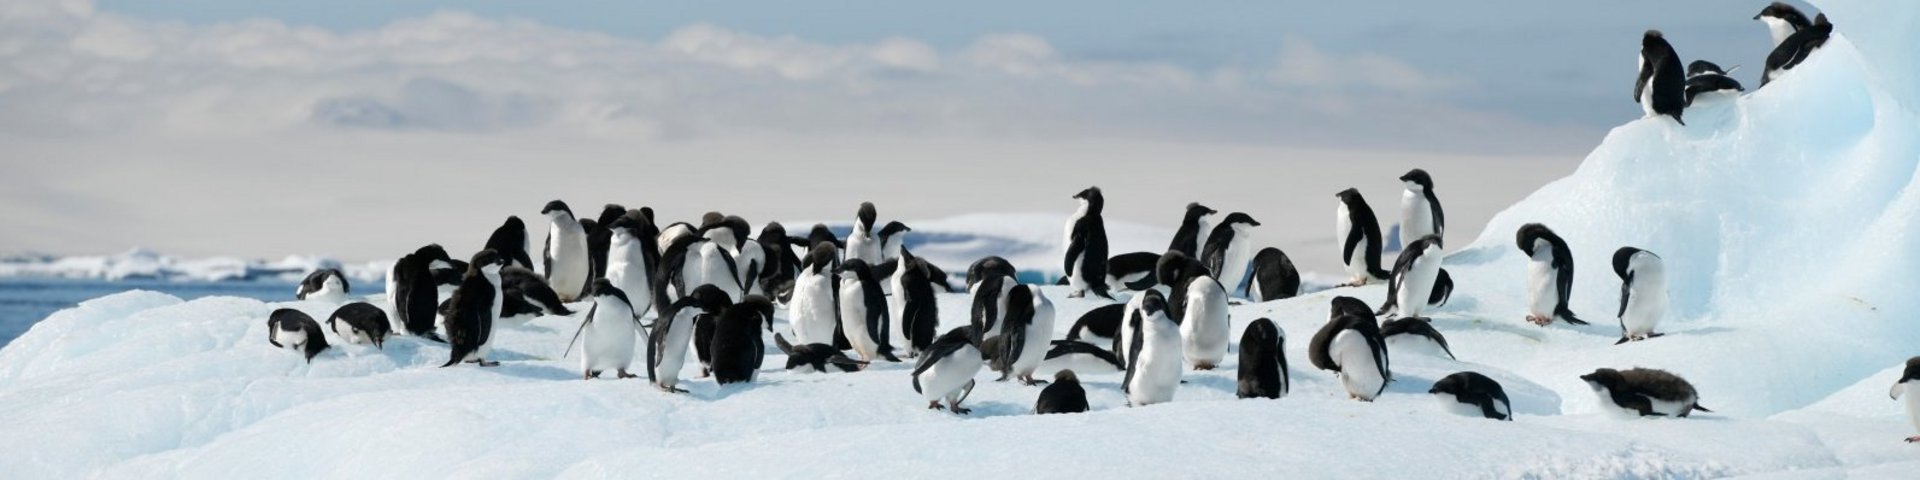 Adeliepinguine in der Antarktis